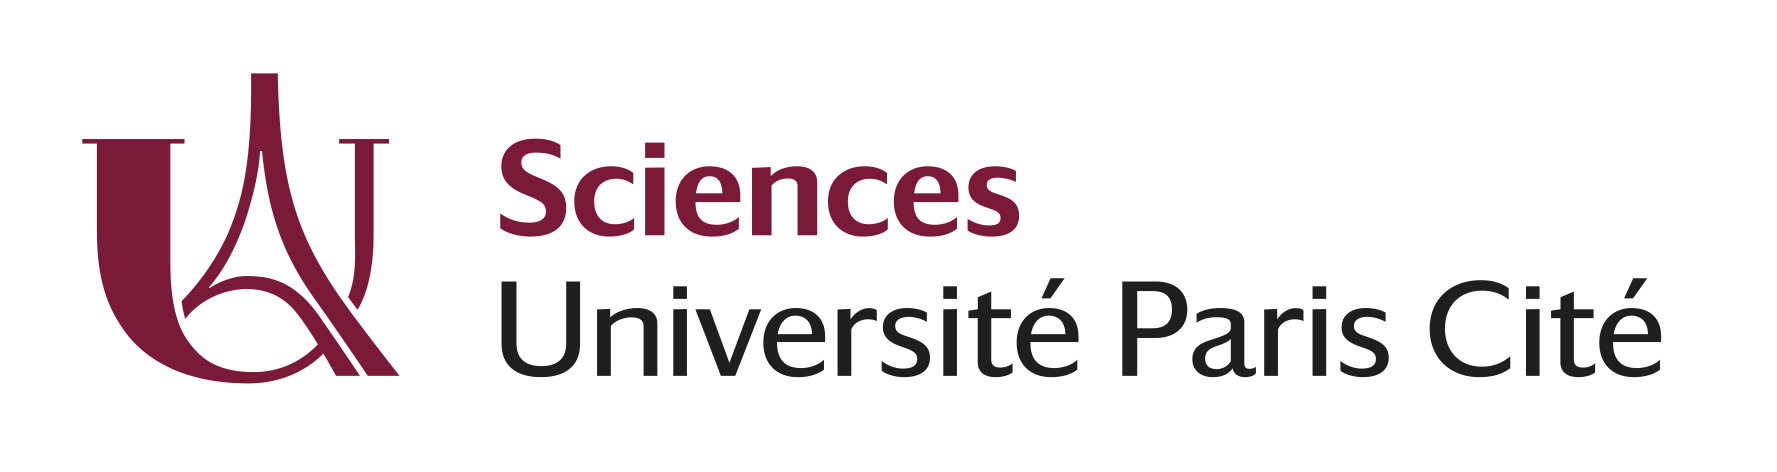 UniversiteParisCite_logo_Faculty_Sciences_couleur_PANTONE.png